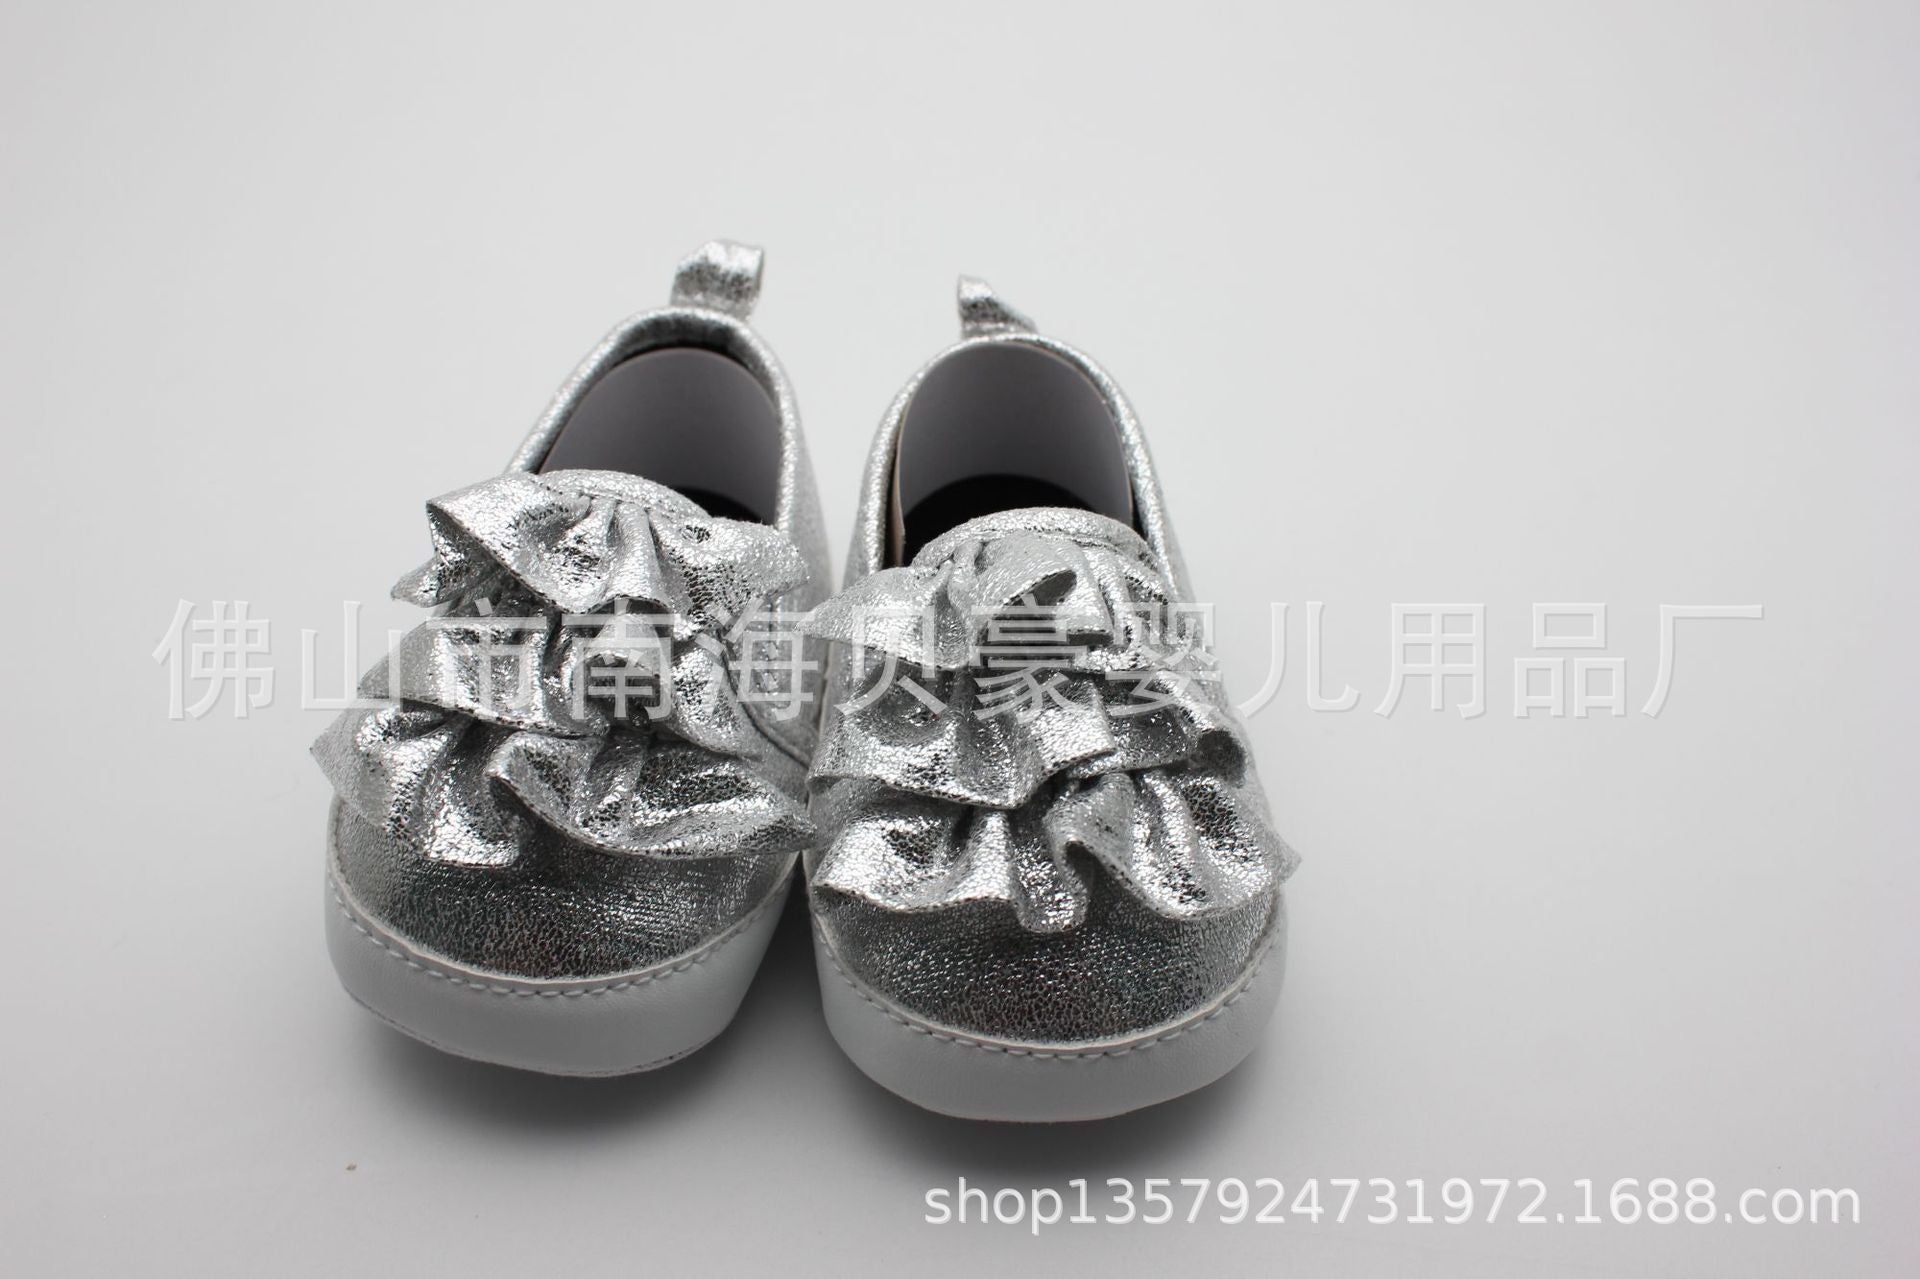 custom made baby shoes